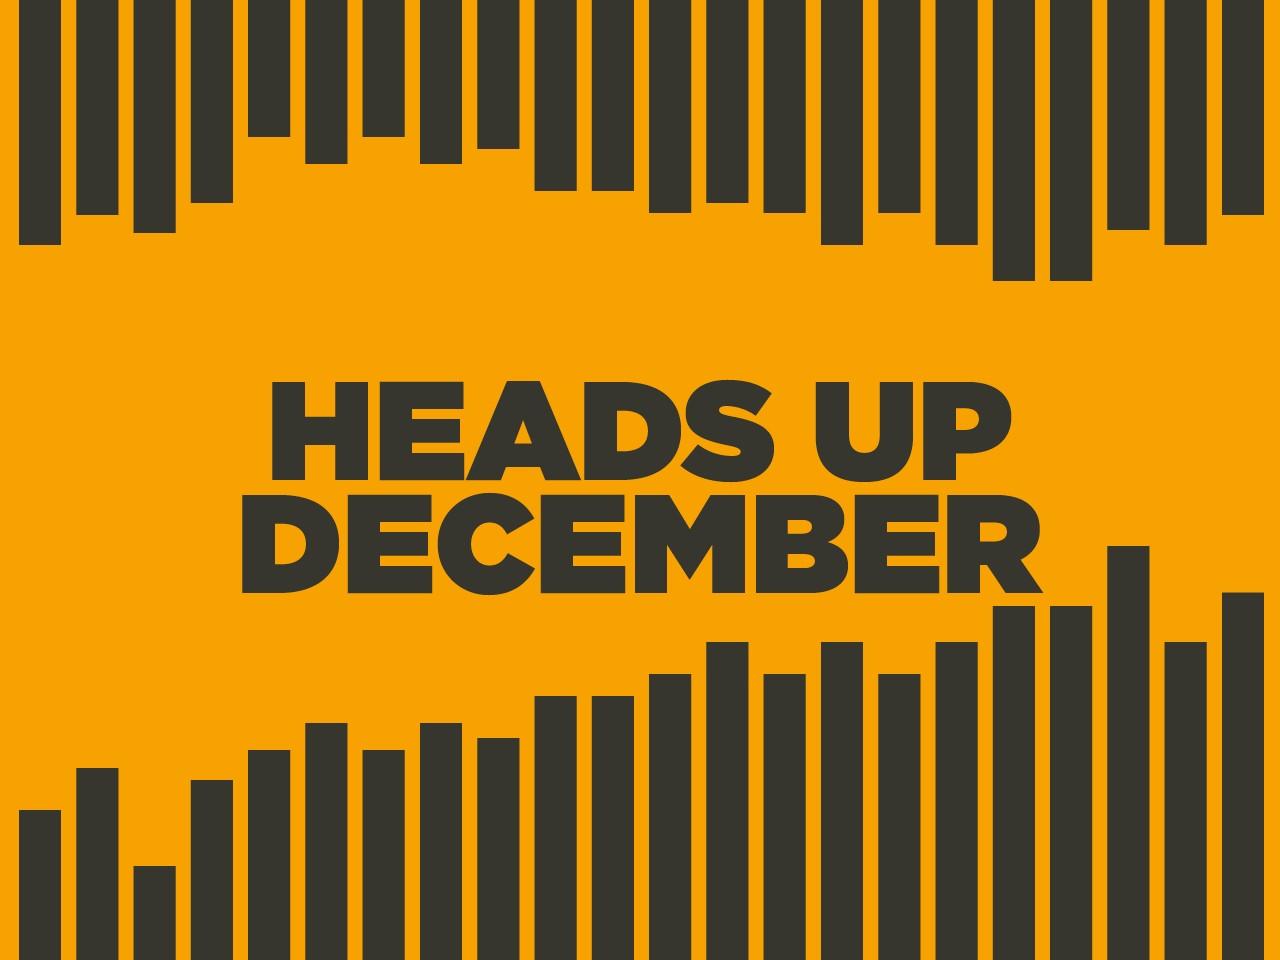 Heads up december